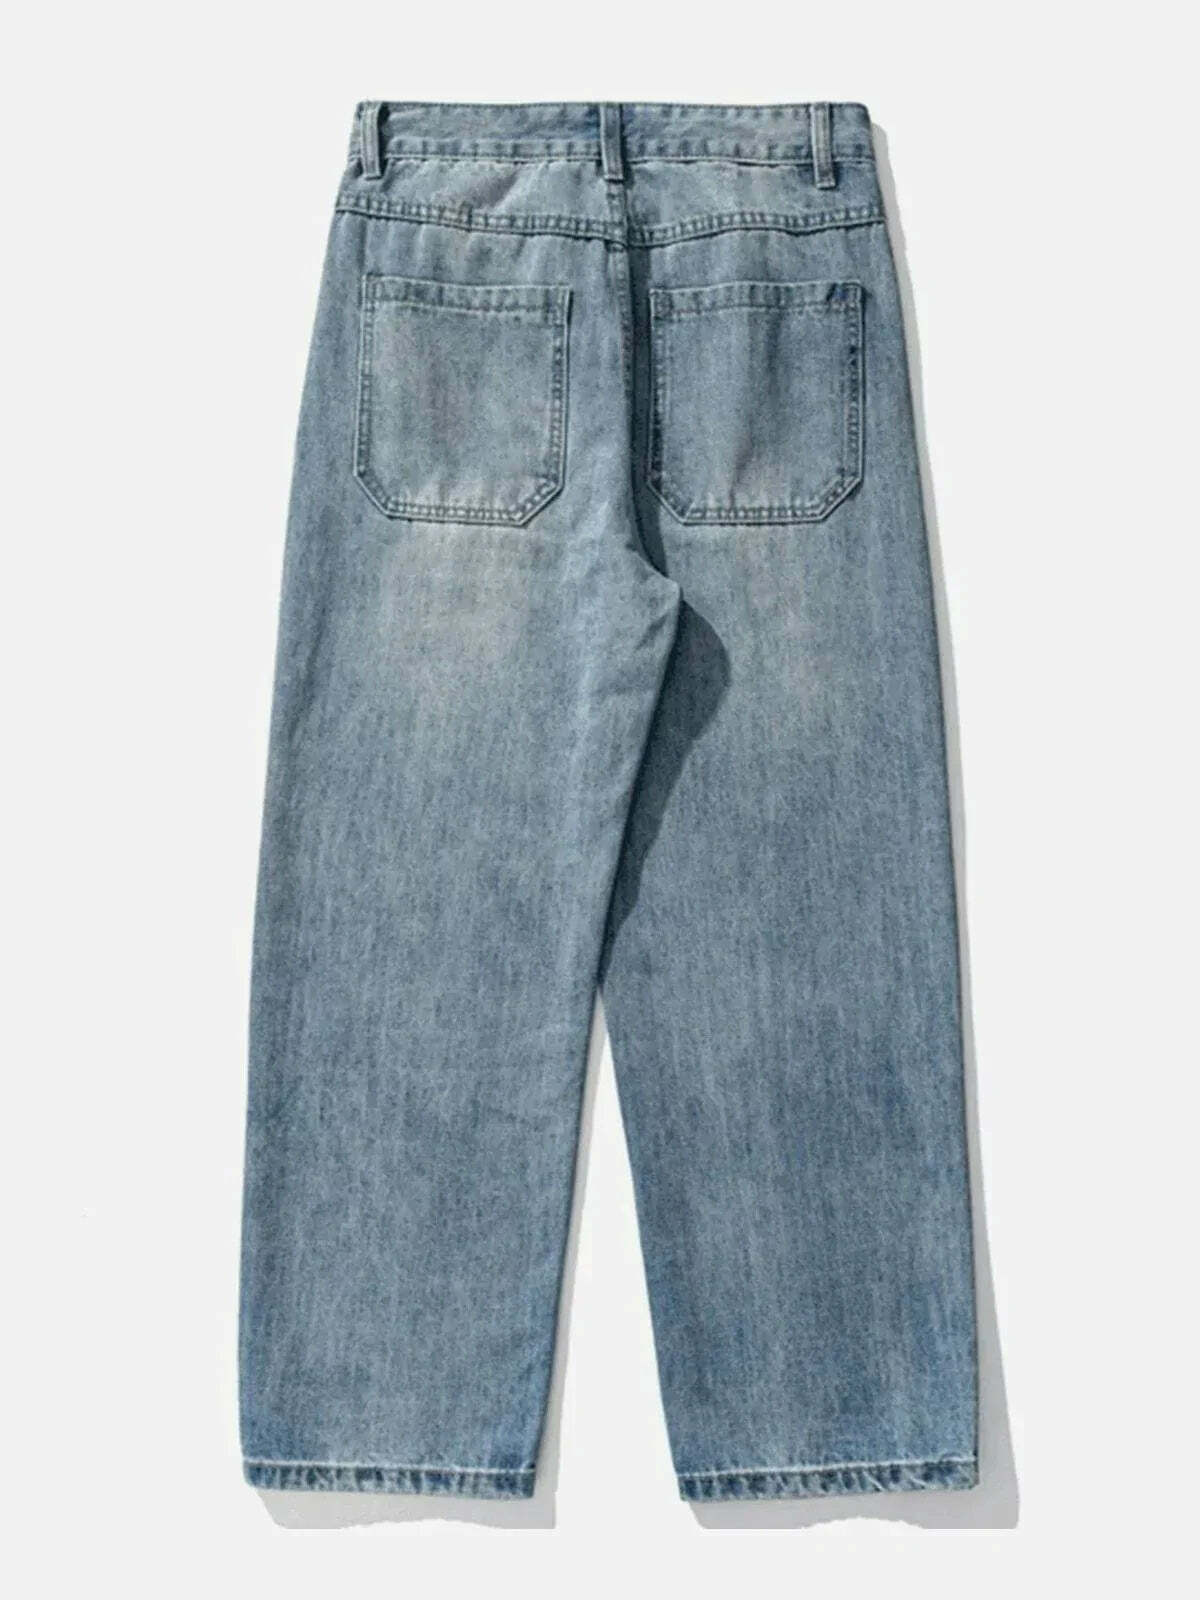 revolutionary washed jeans minimalist & edgy style 6738